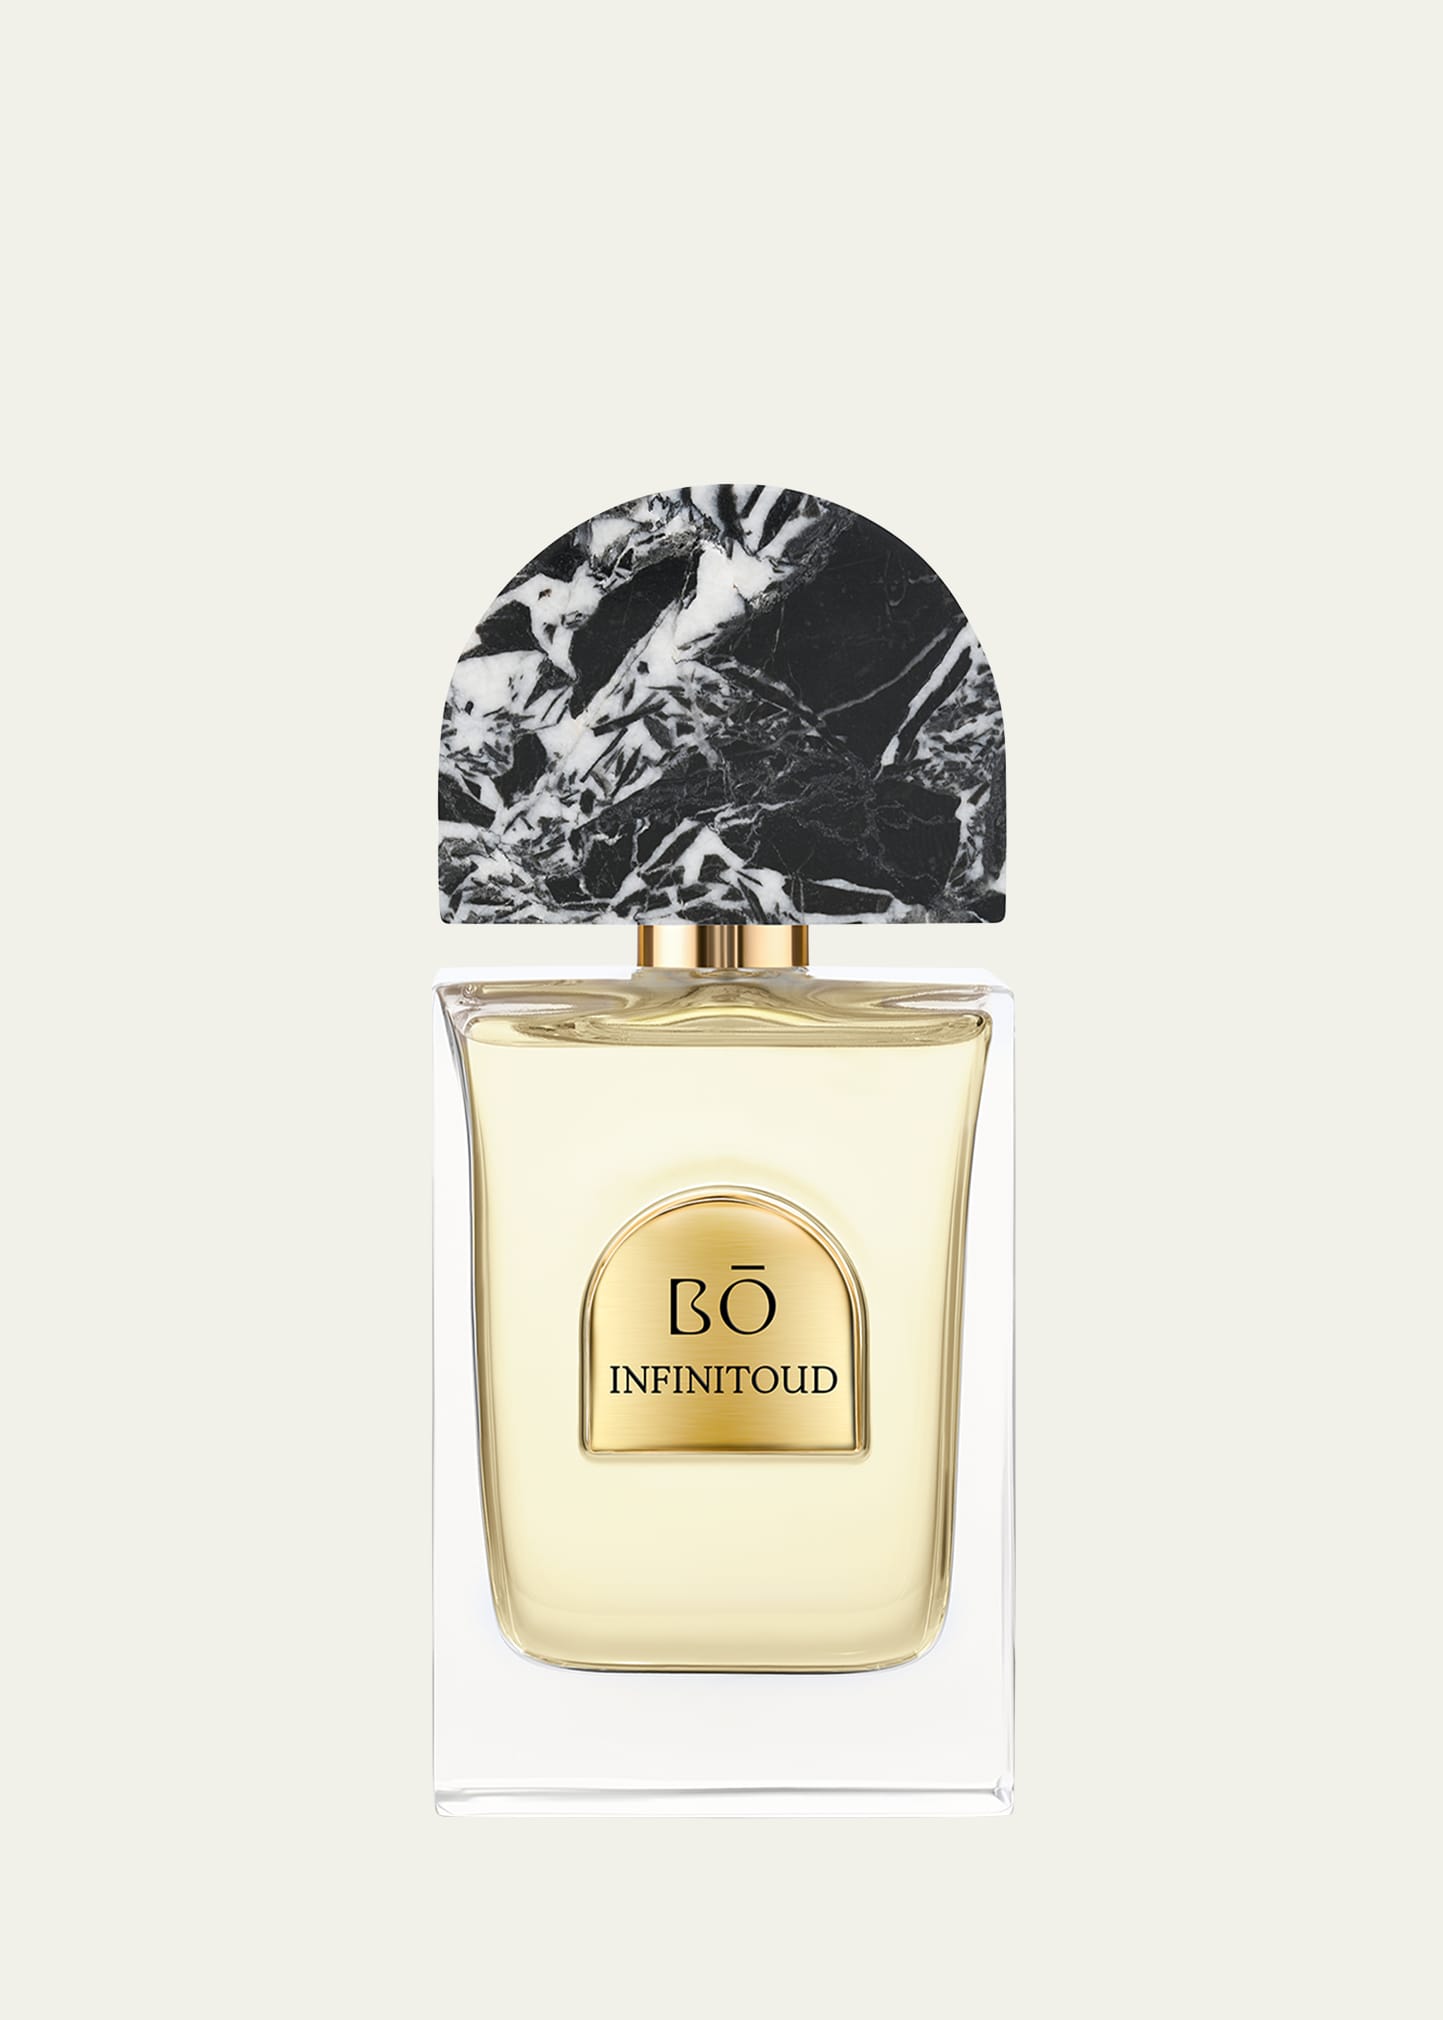 House of Bo Fragrances Infinitoud Parfum, 2.5 oz.